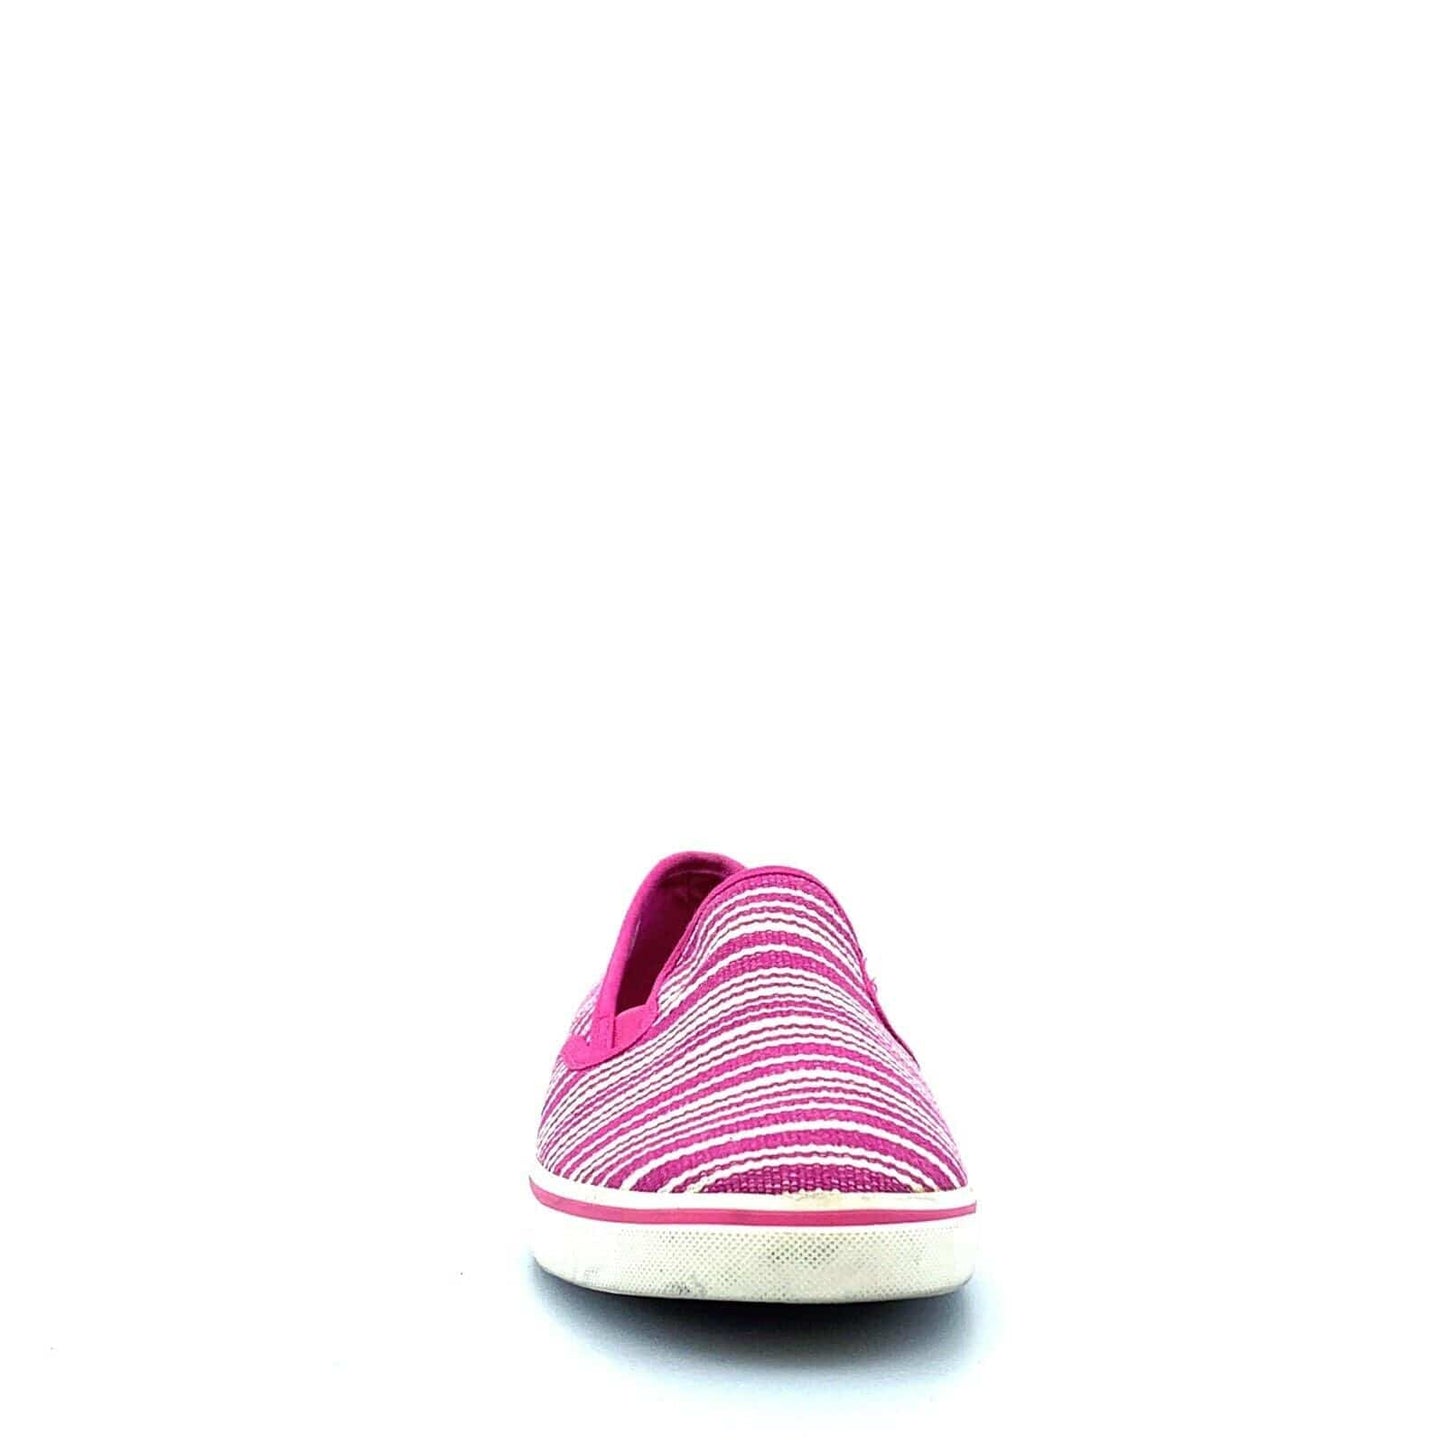 Ralph Lauren Womens Size 9.5B Pink White Striped ‘Janis’ Canvas Flats Shoes NIB